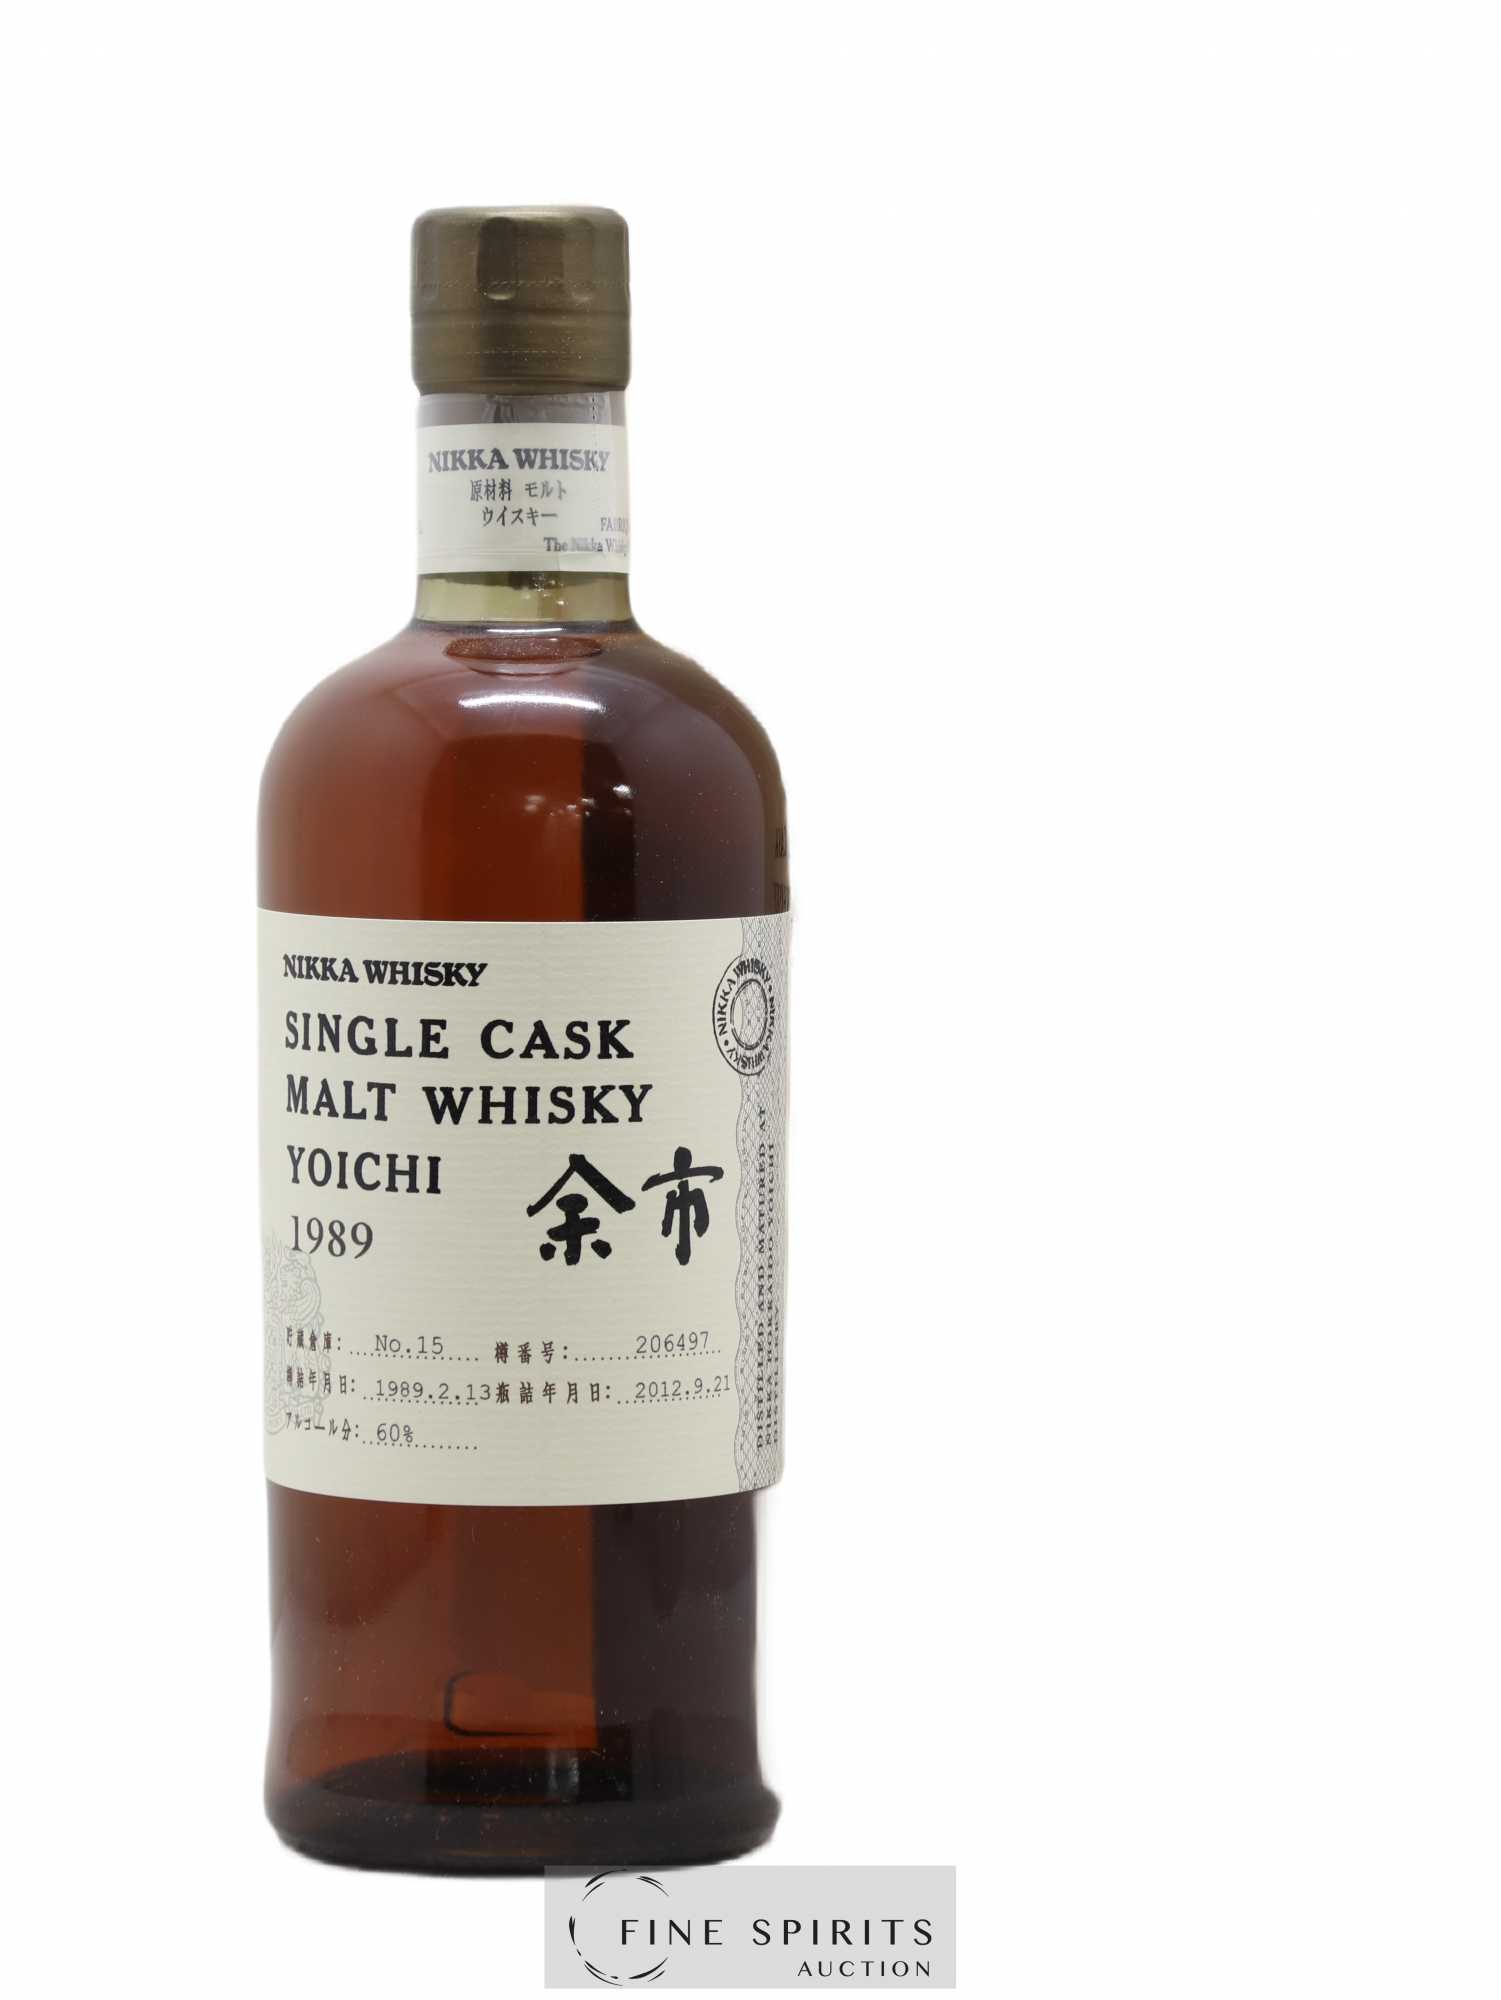 Yoichi 1989 Of. Warehouse n°15 Cask n°206497 LMDW Single Cask Malt Whisky